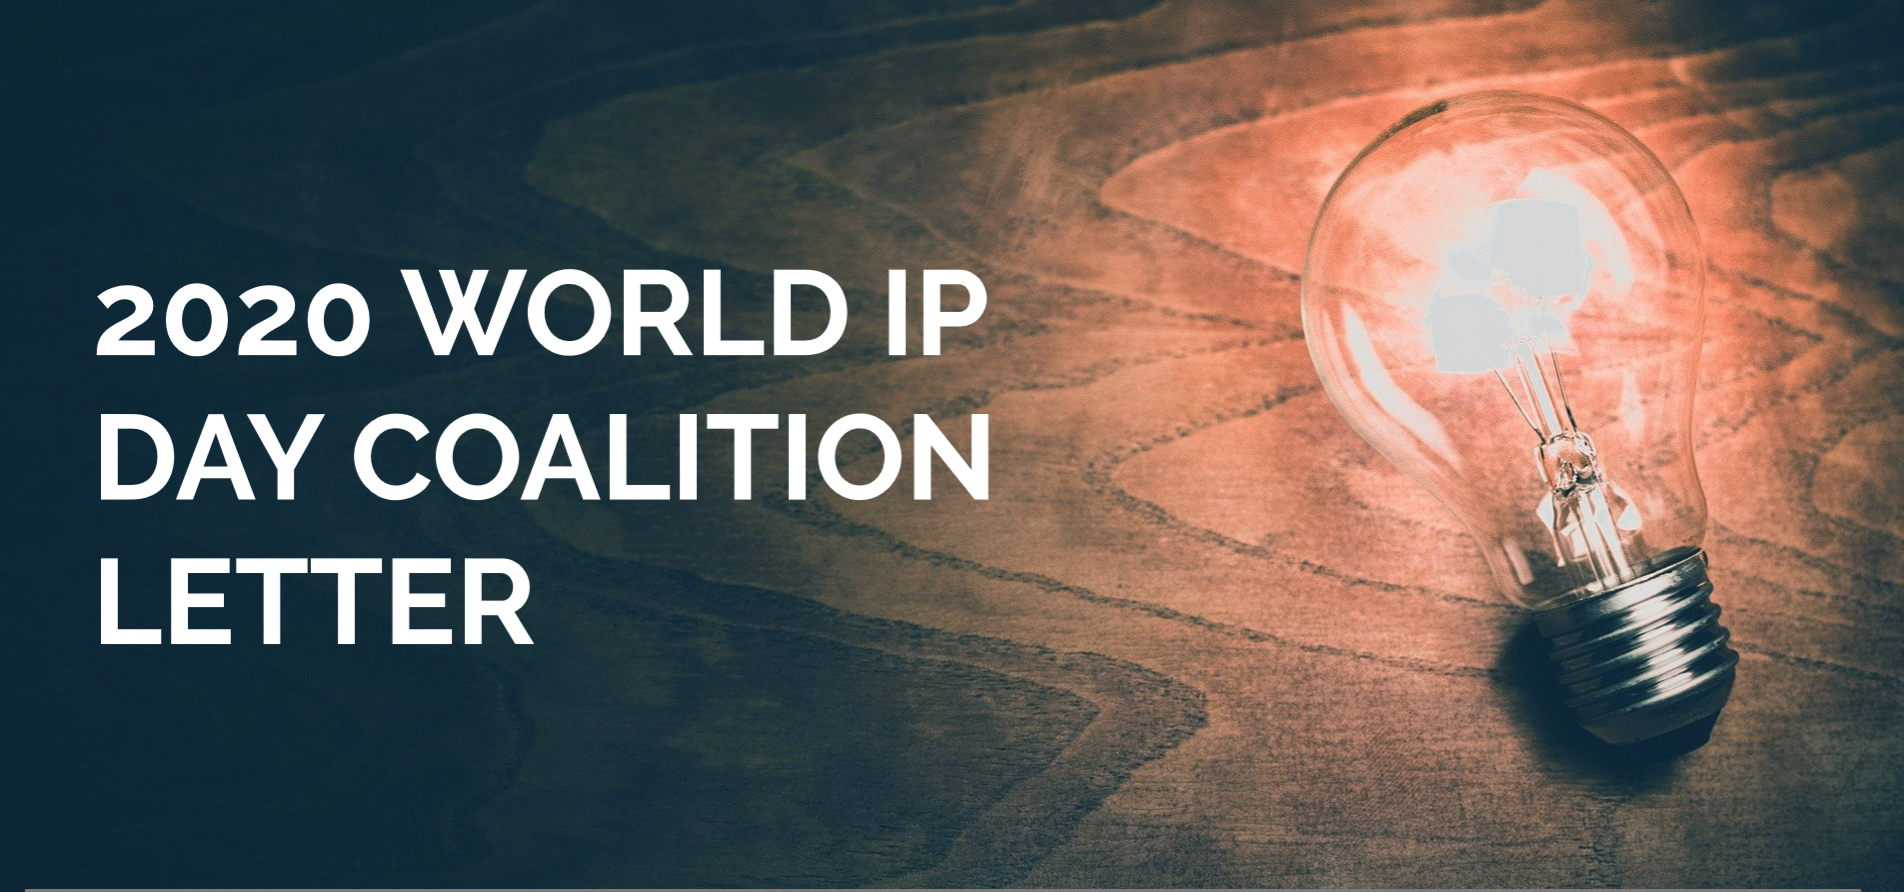 2020 World IP Day